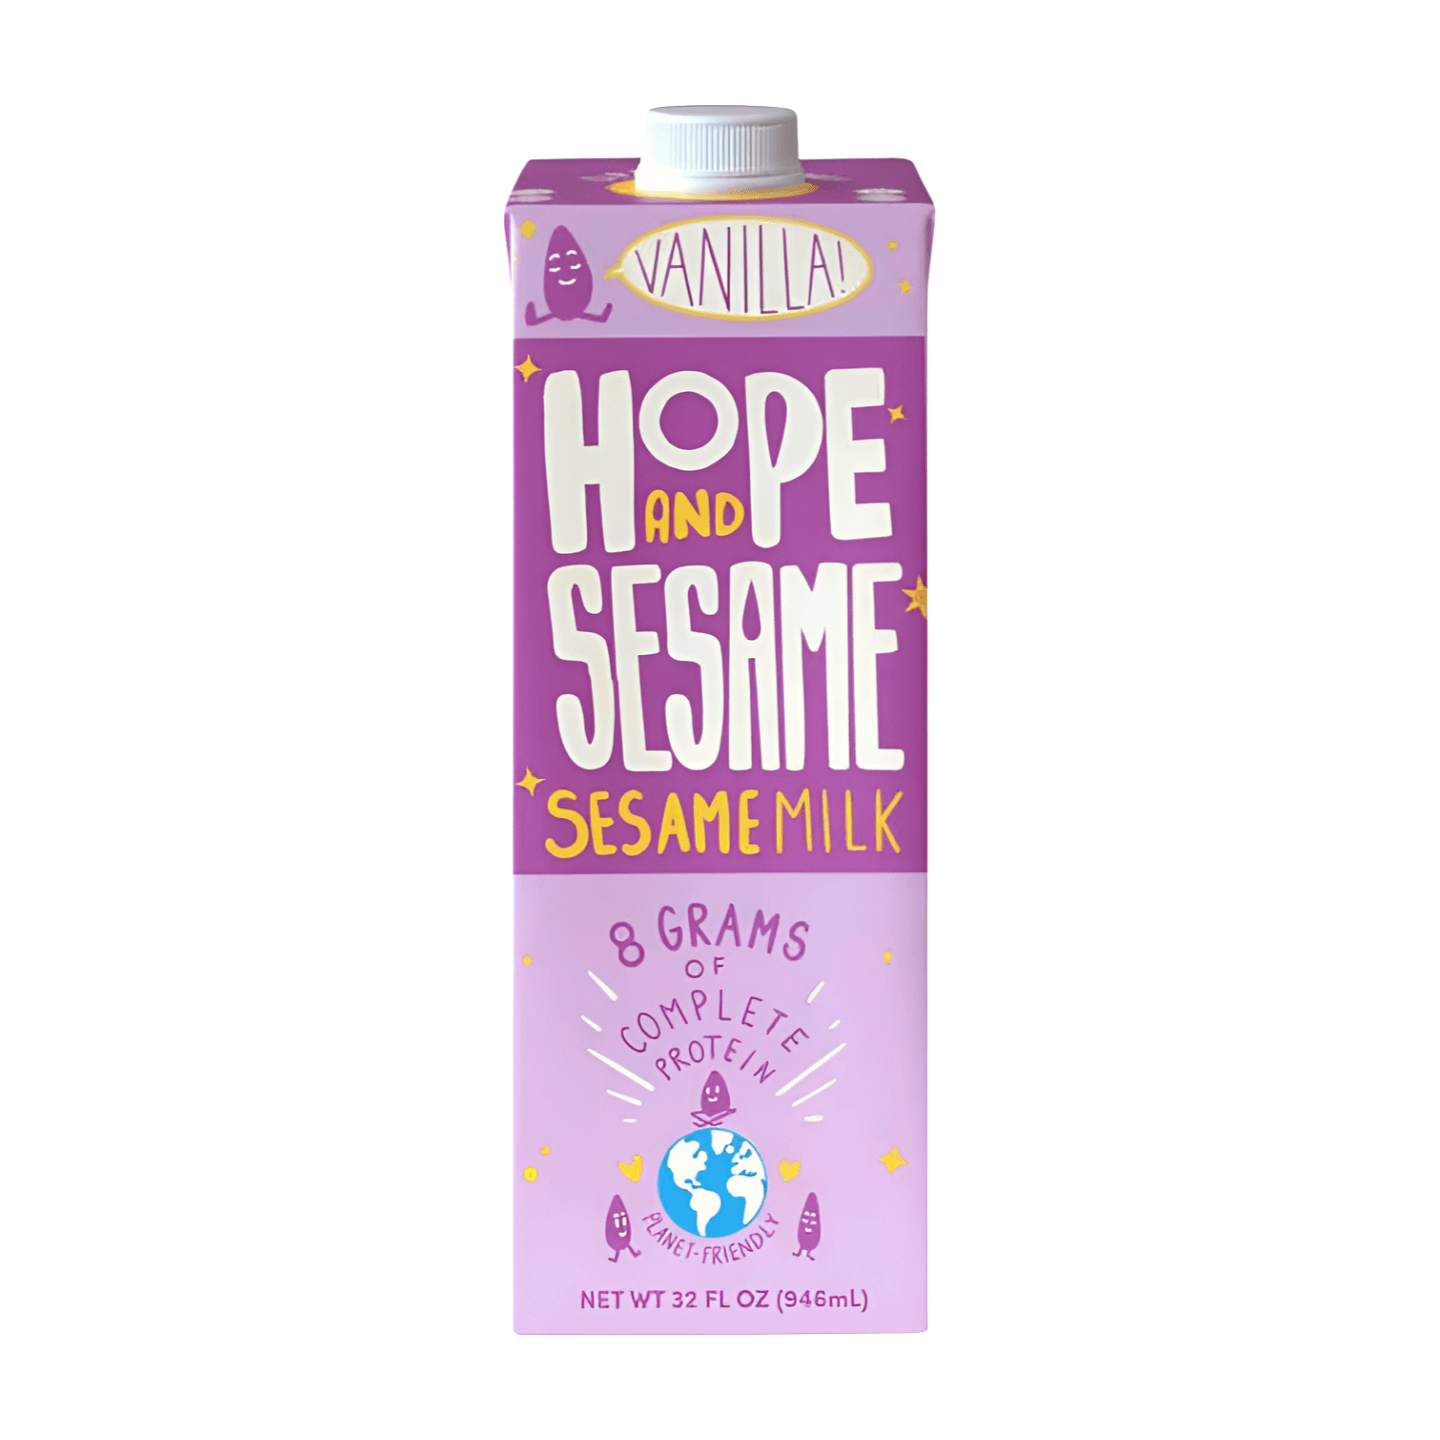 Hope And Sesame Vanilla Sesamemilk